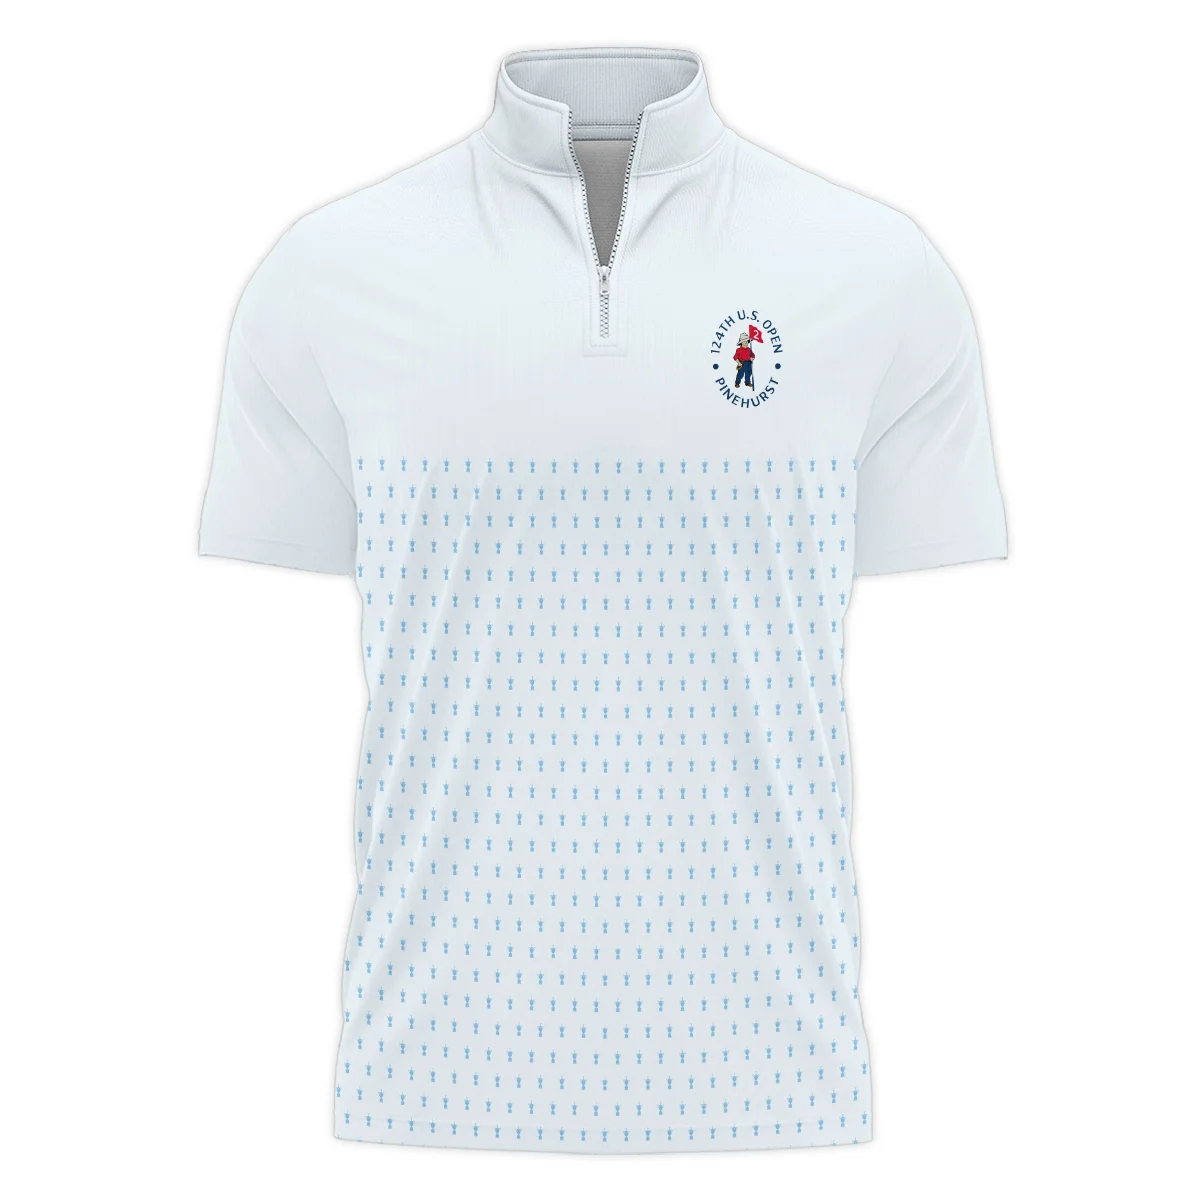 U.S Open Trophy Pattern Light Blue 124th U.S. Open Pinehurst Callaway Hoodie Shirt Style Classic Hoodie Shirt